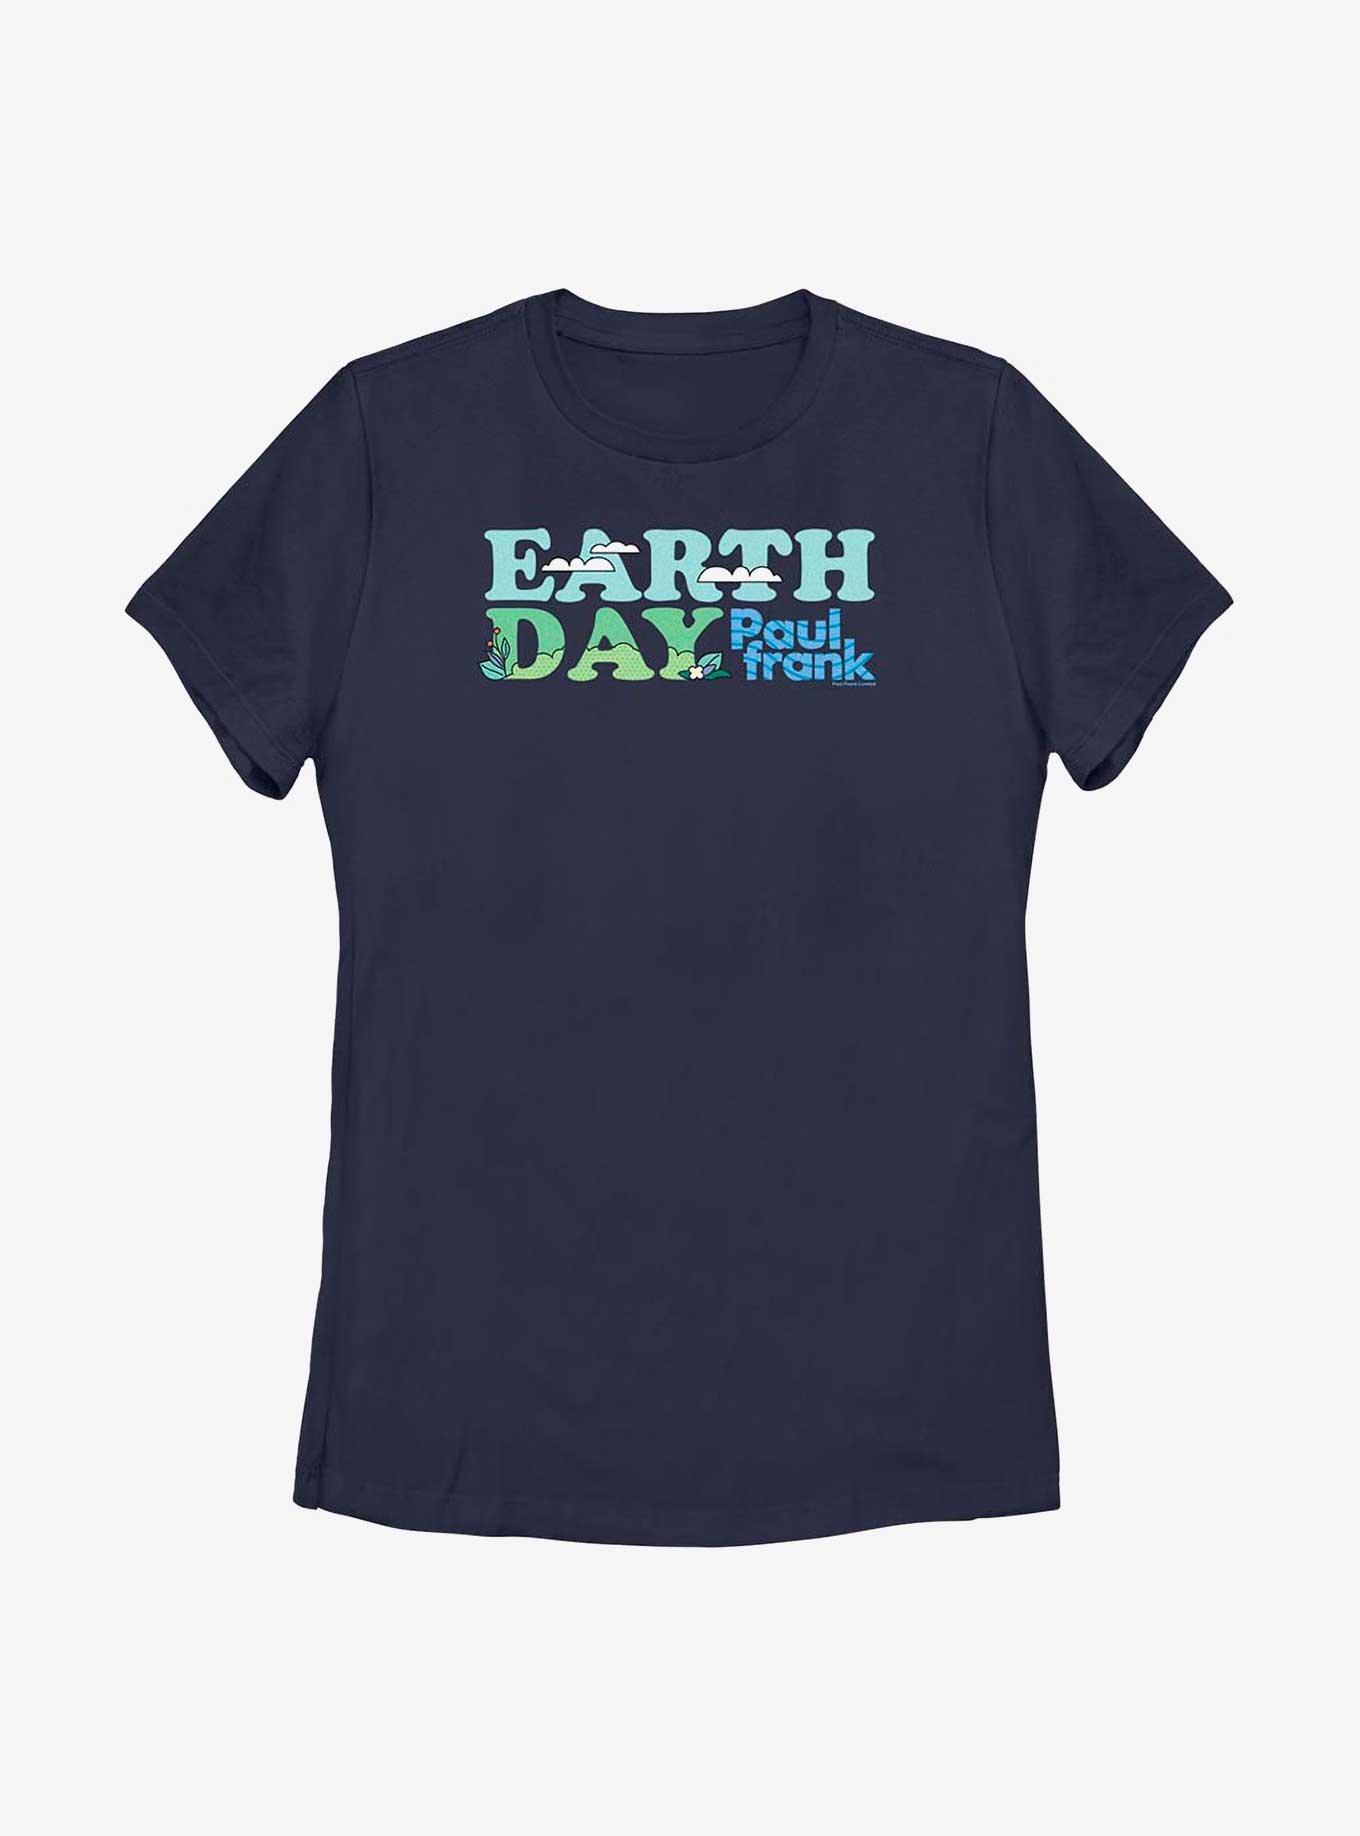 Paul Frank Earth Day Womens T-Shirt, NAVY, hi-res